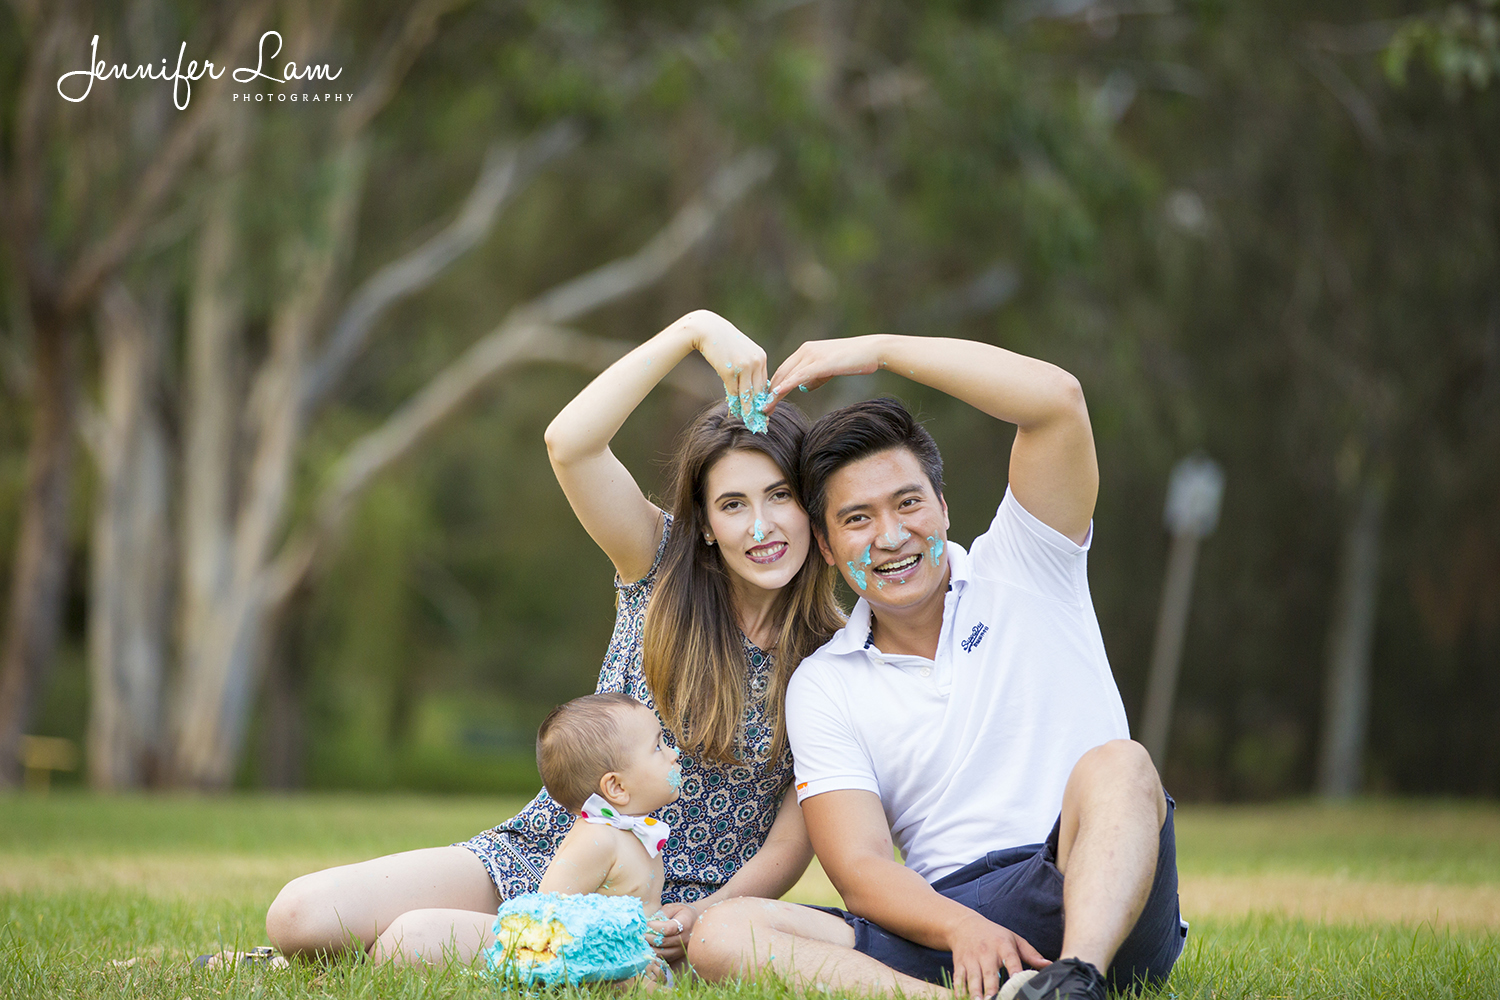 Family Portrait Session - Jennifer Lam Photography - Sydney - Australia